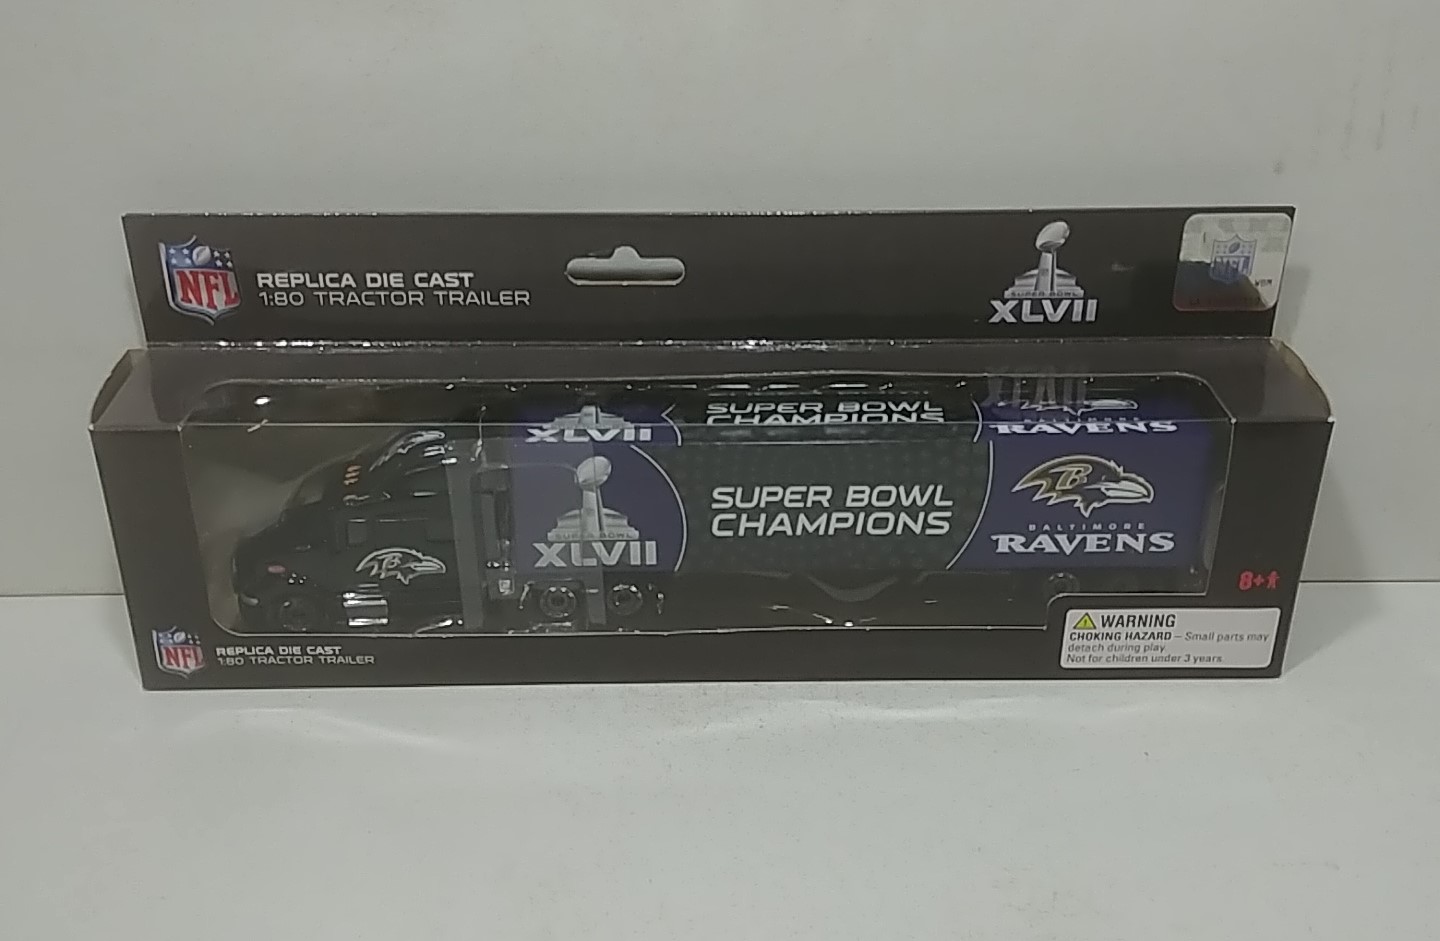 2013 Baltimore Ravens "Super Bowl XLVII Champions" Transporter